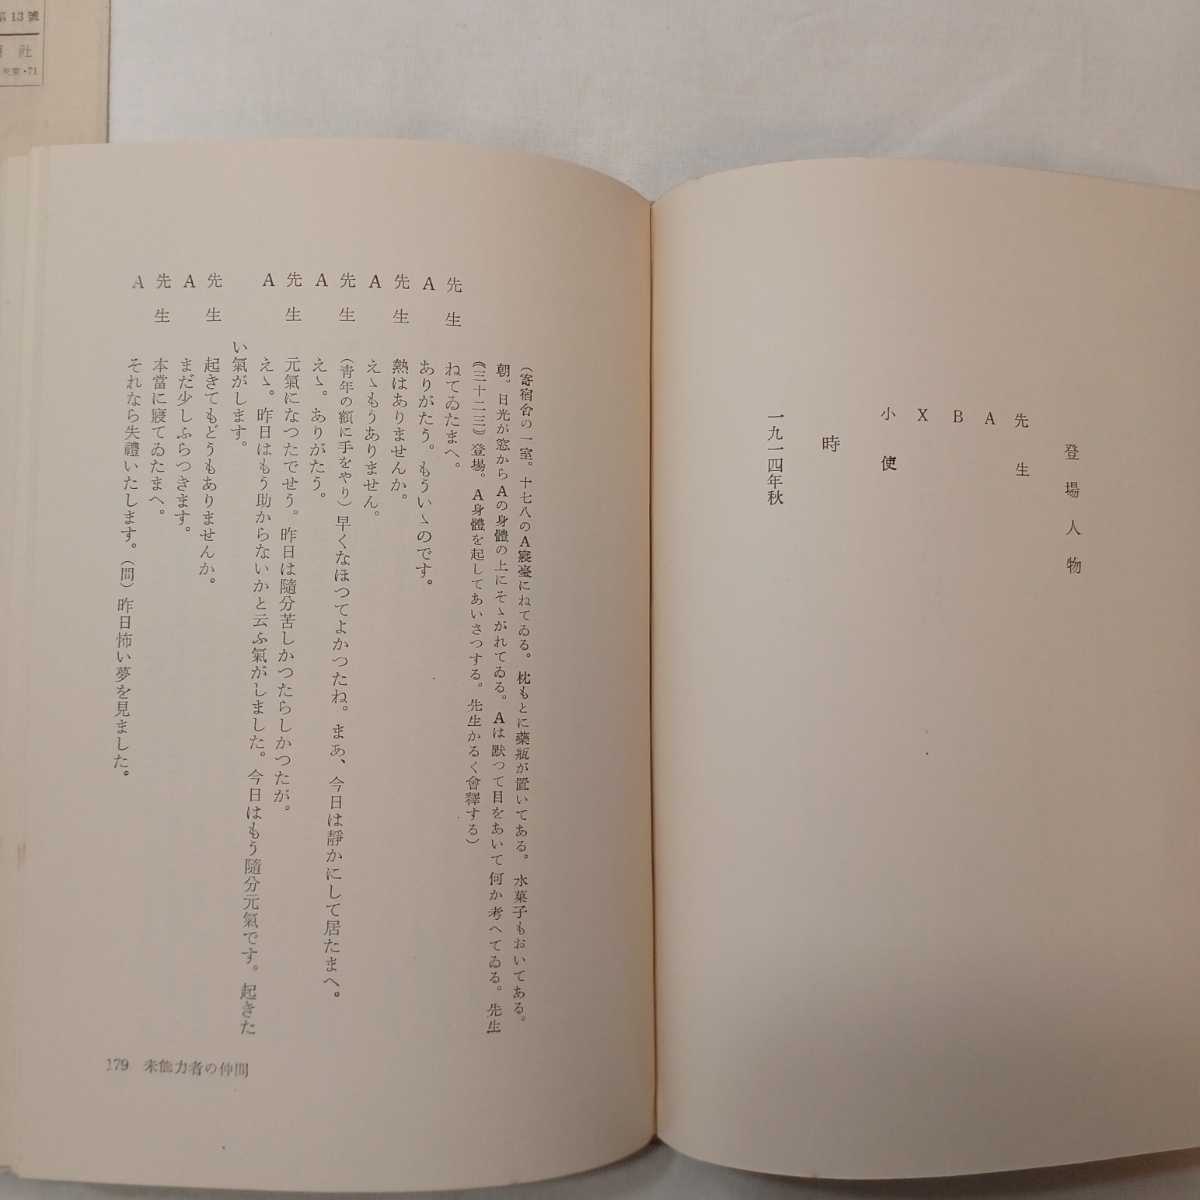 zaa-mb05! Mushakoji Saneatsu полное собрание сочинений ( no. 14 шт ) пьеса 1 1955 год 1 месяц 1 день Mushakoji Saneatsu ( работа ) Shinchosha версия 